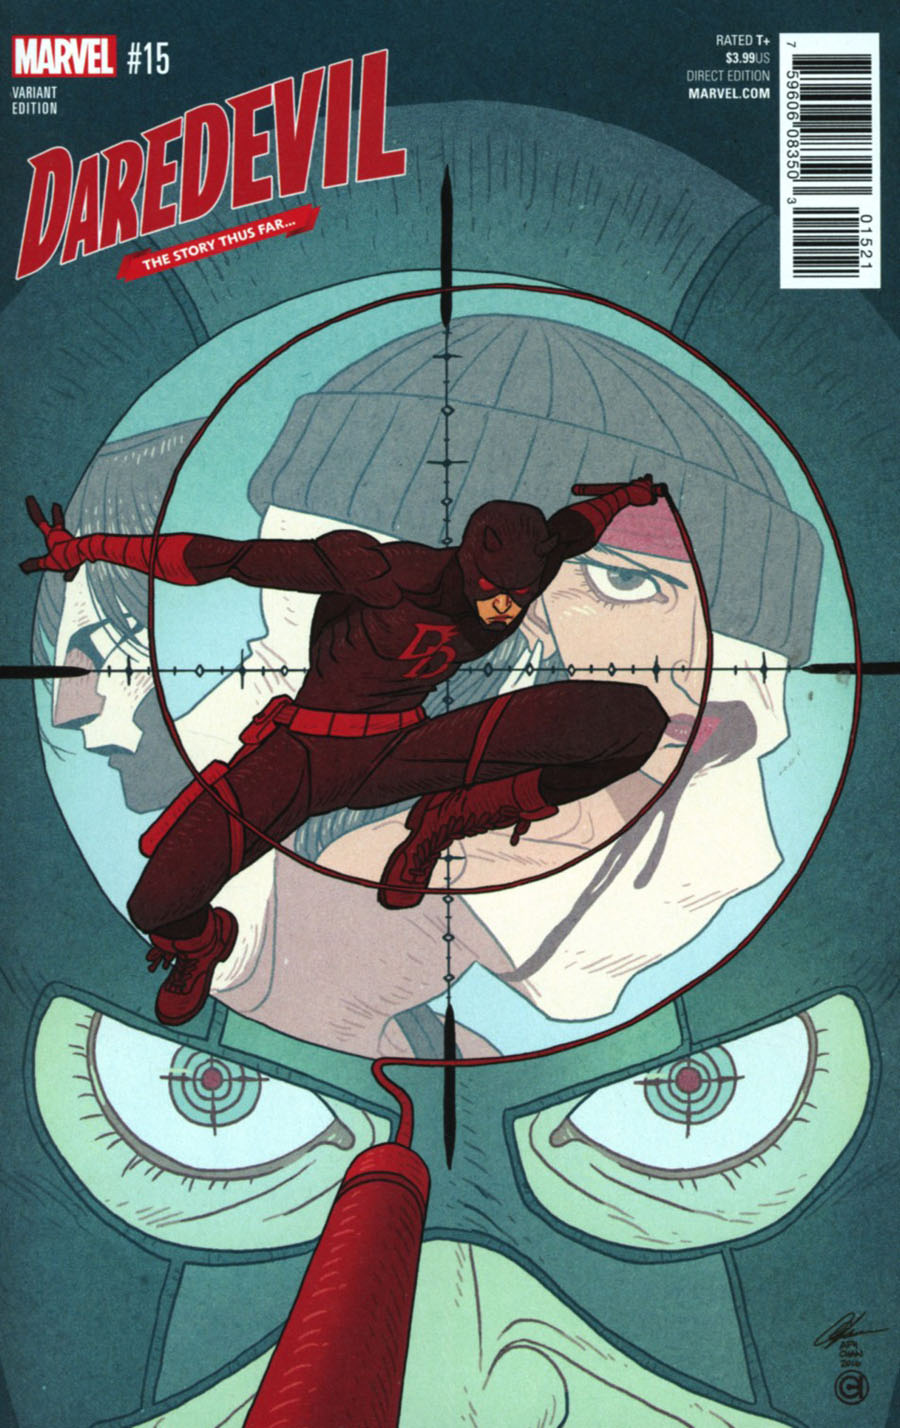 Daredevil Vol 5 #15 Cover B Variant Story Thus Far Cover (Marvel Now Tie-In)